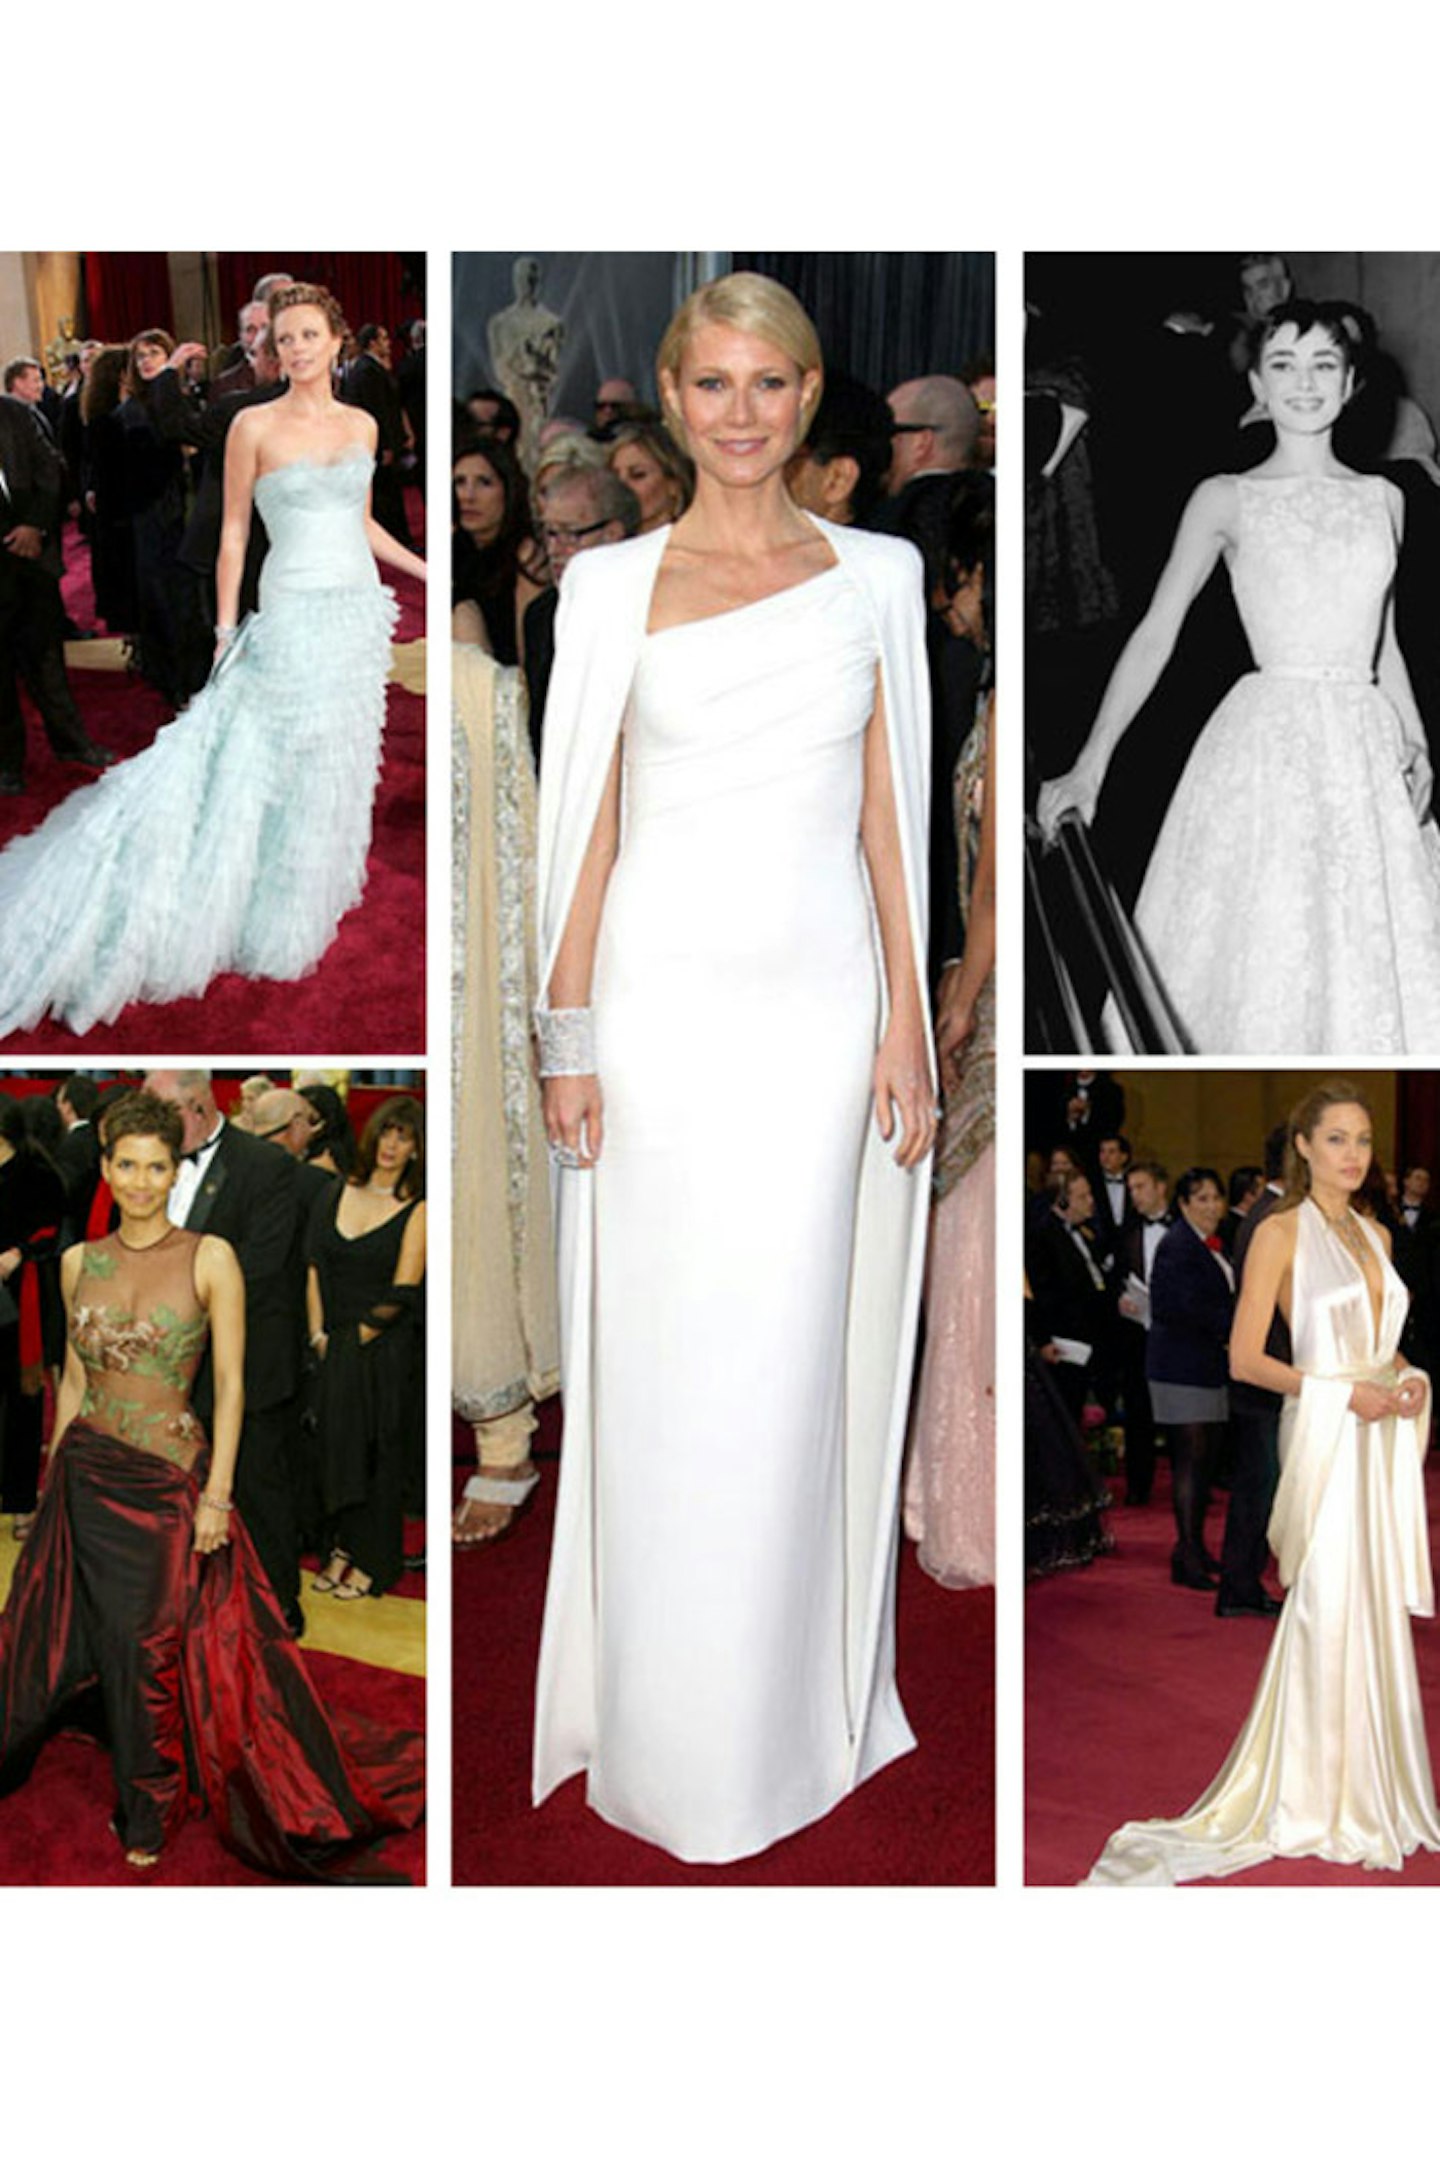 GALLERY >> The Best Oscar Dresses